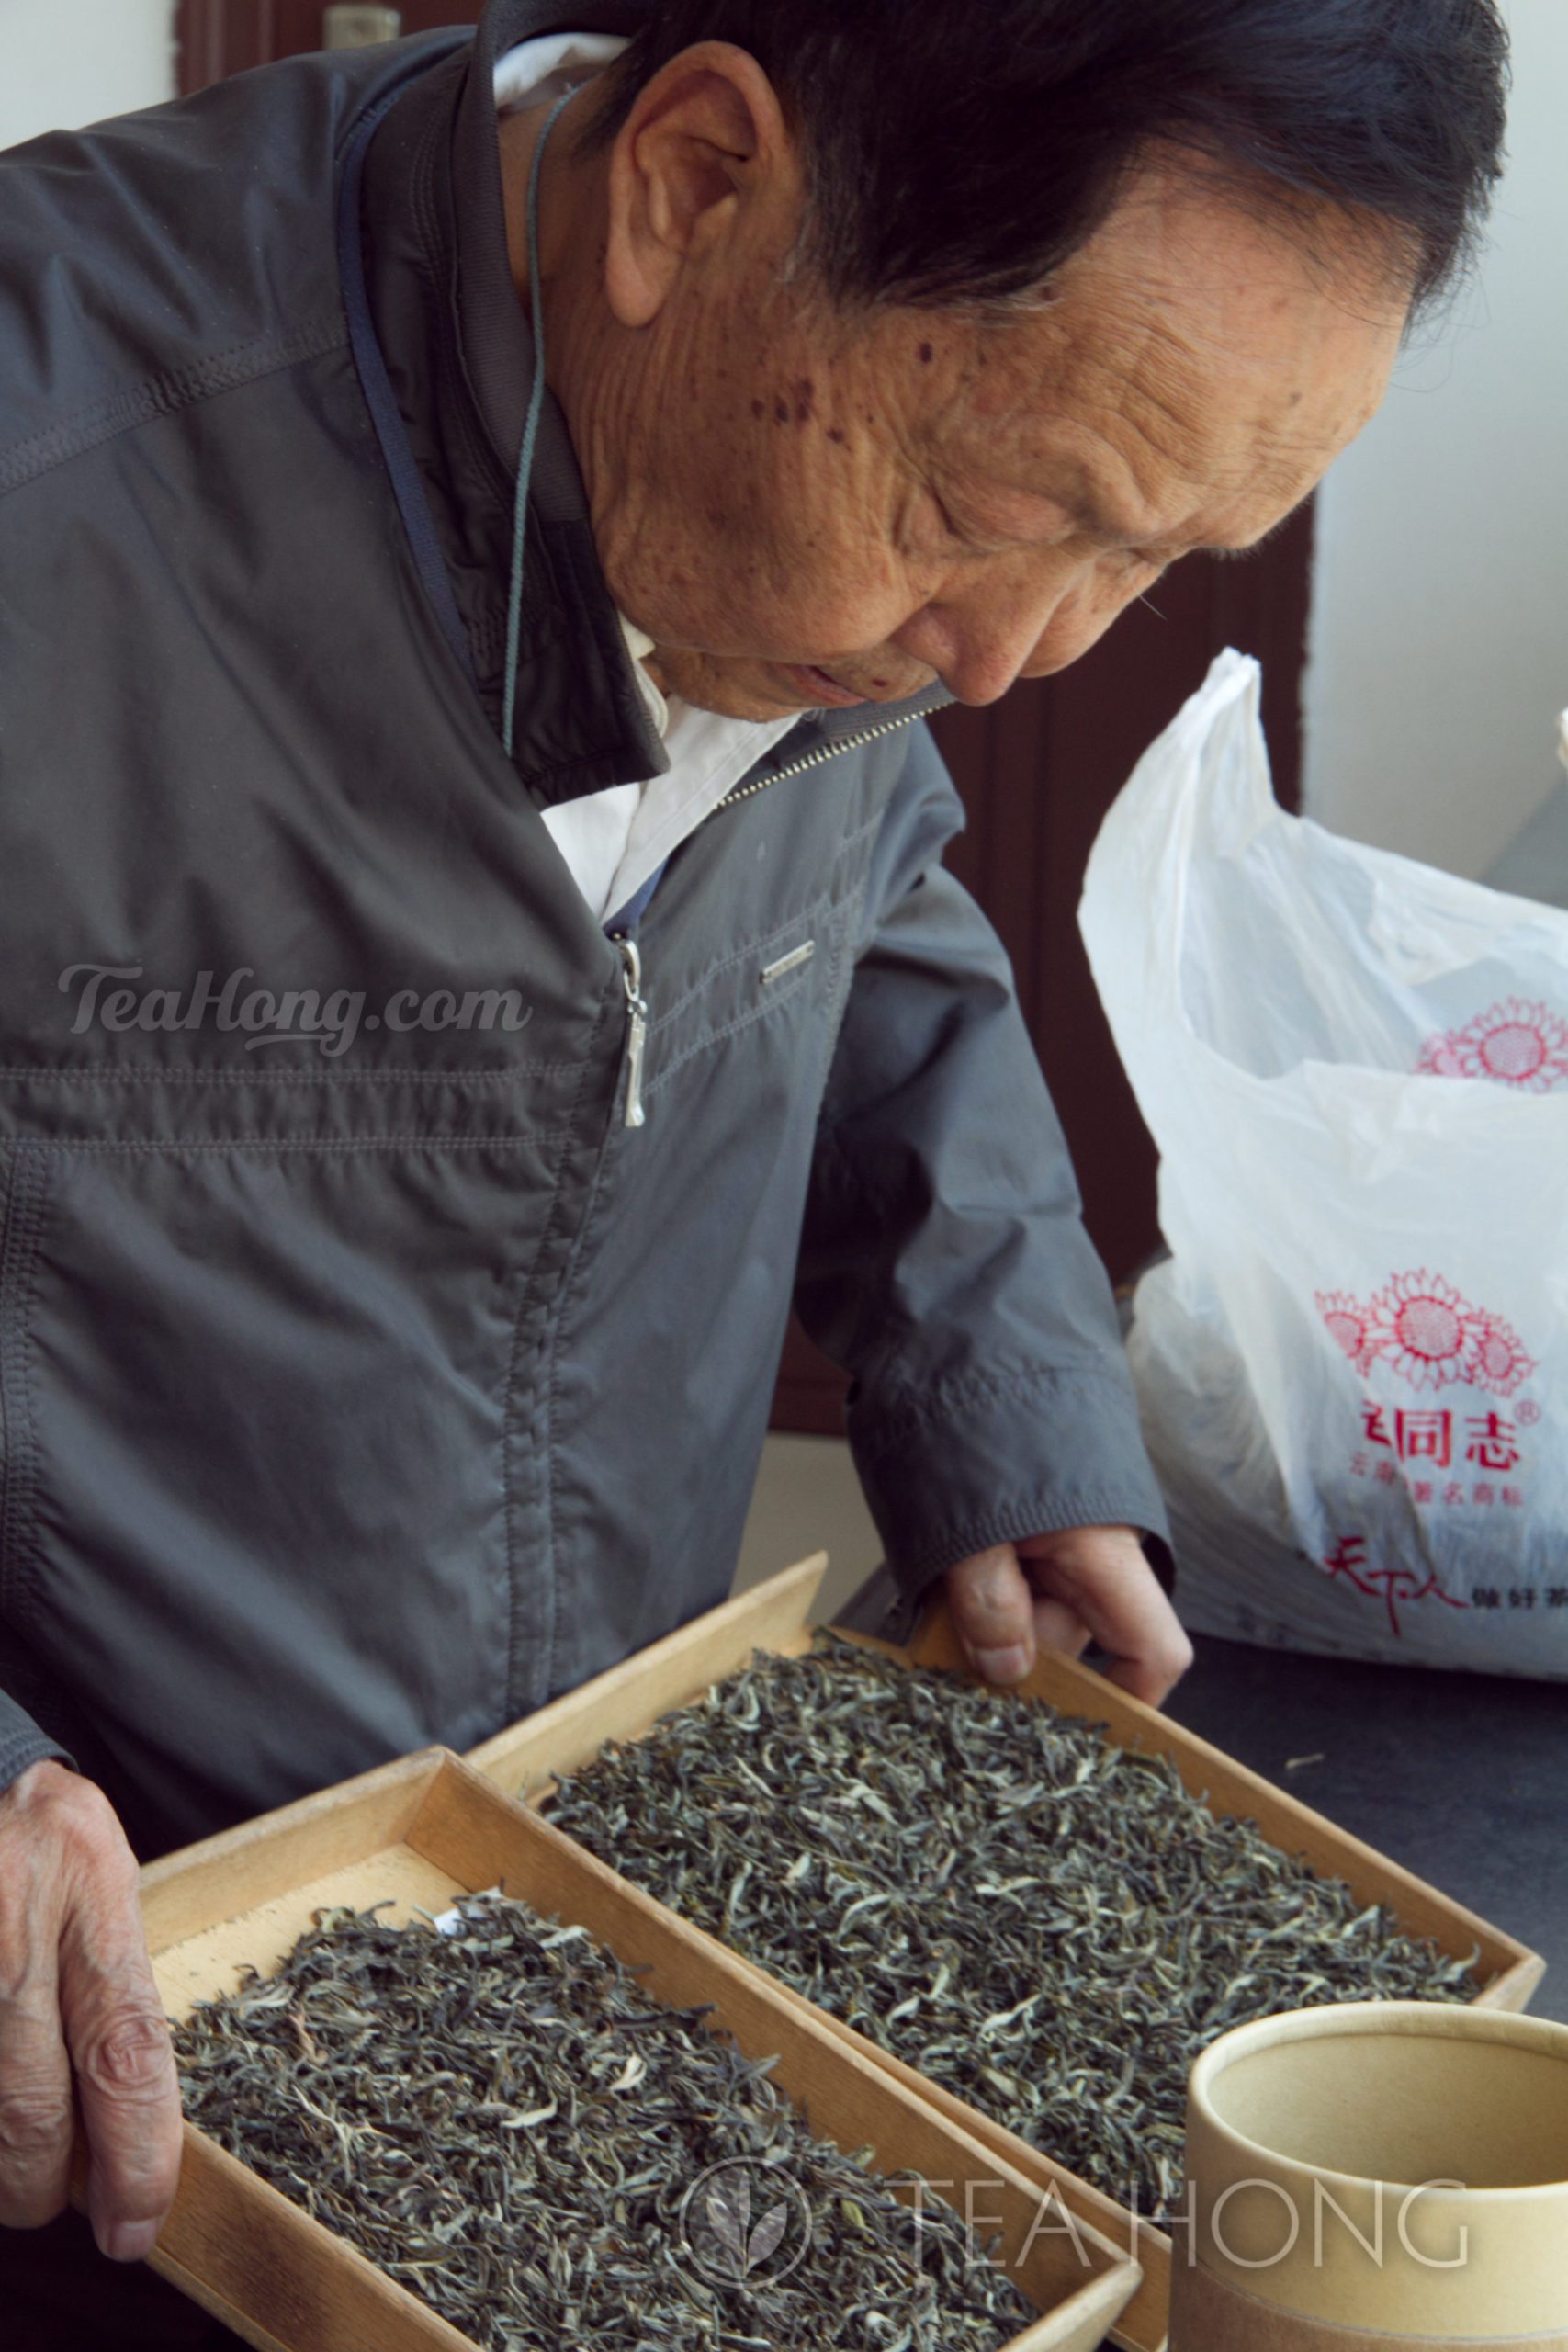 Master Zao studying samples of maocha